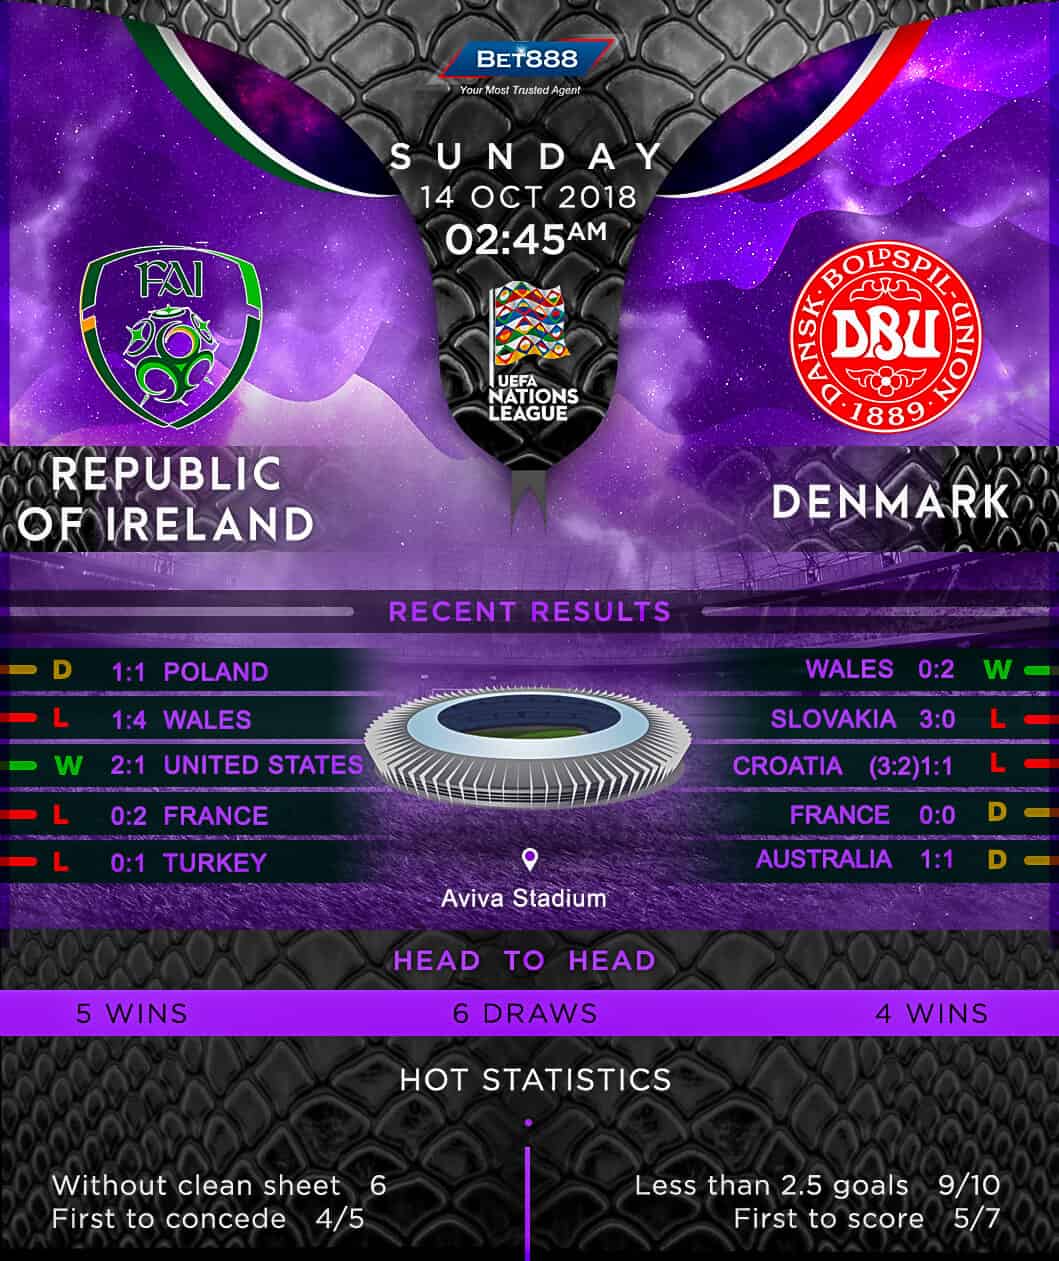 Republic of Ireland vs Denmark 14/10/18